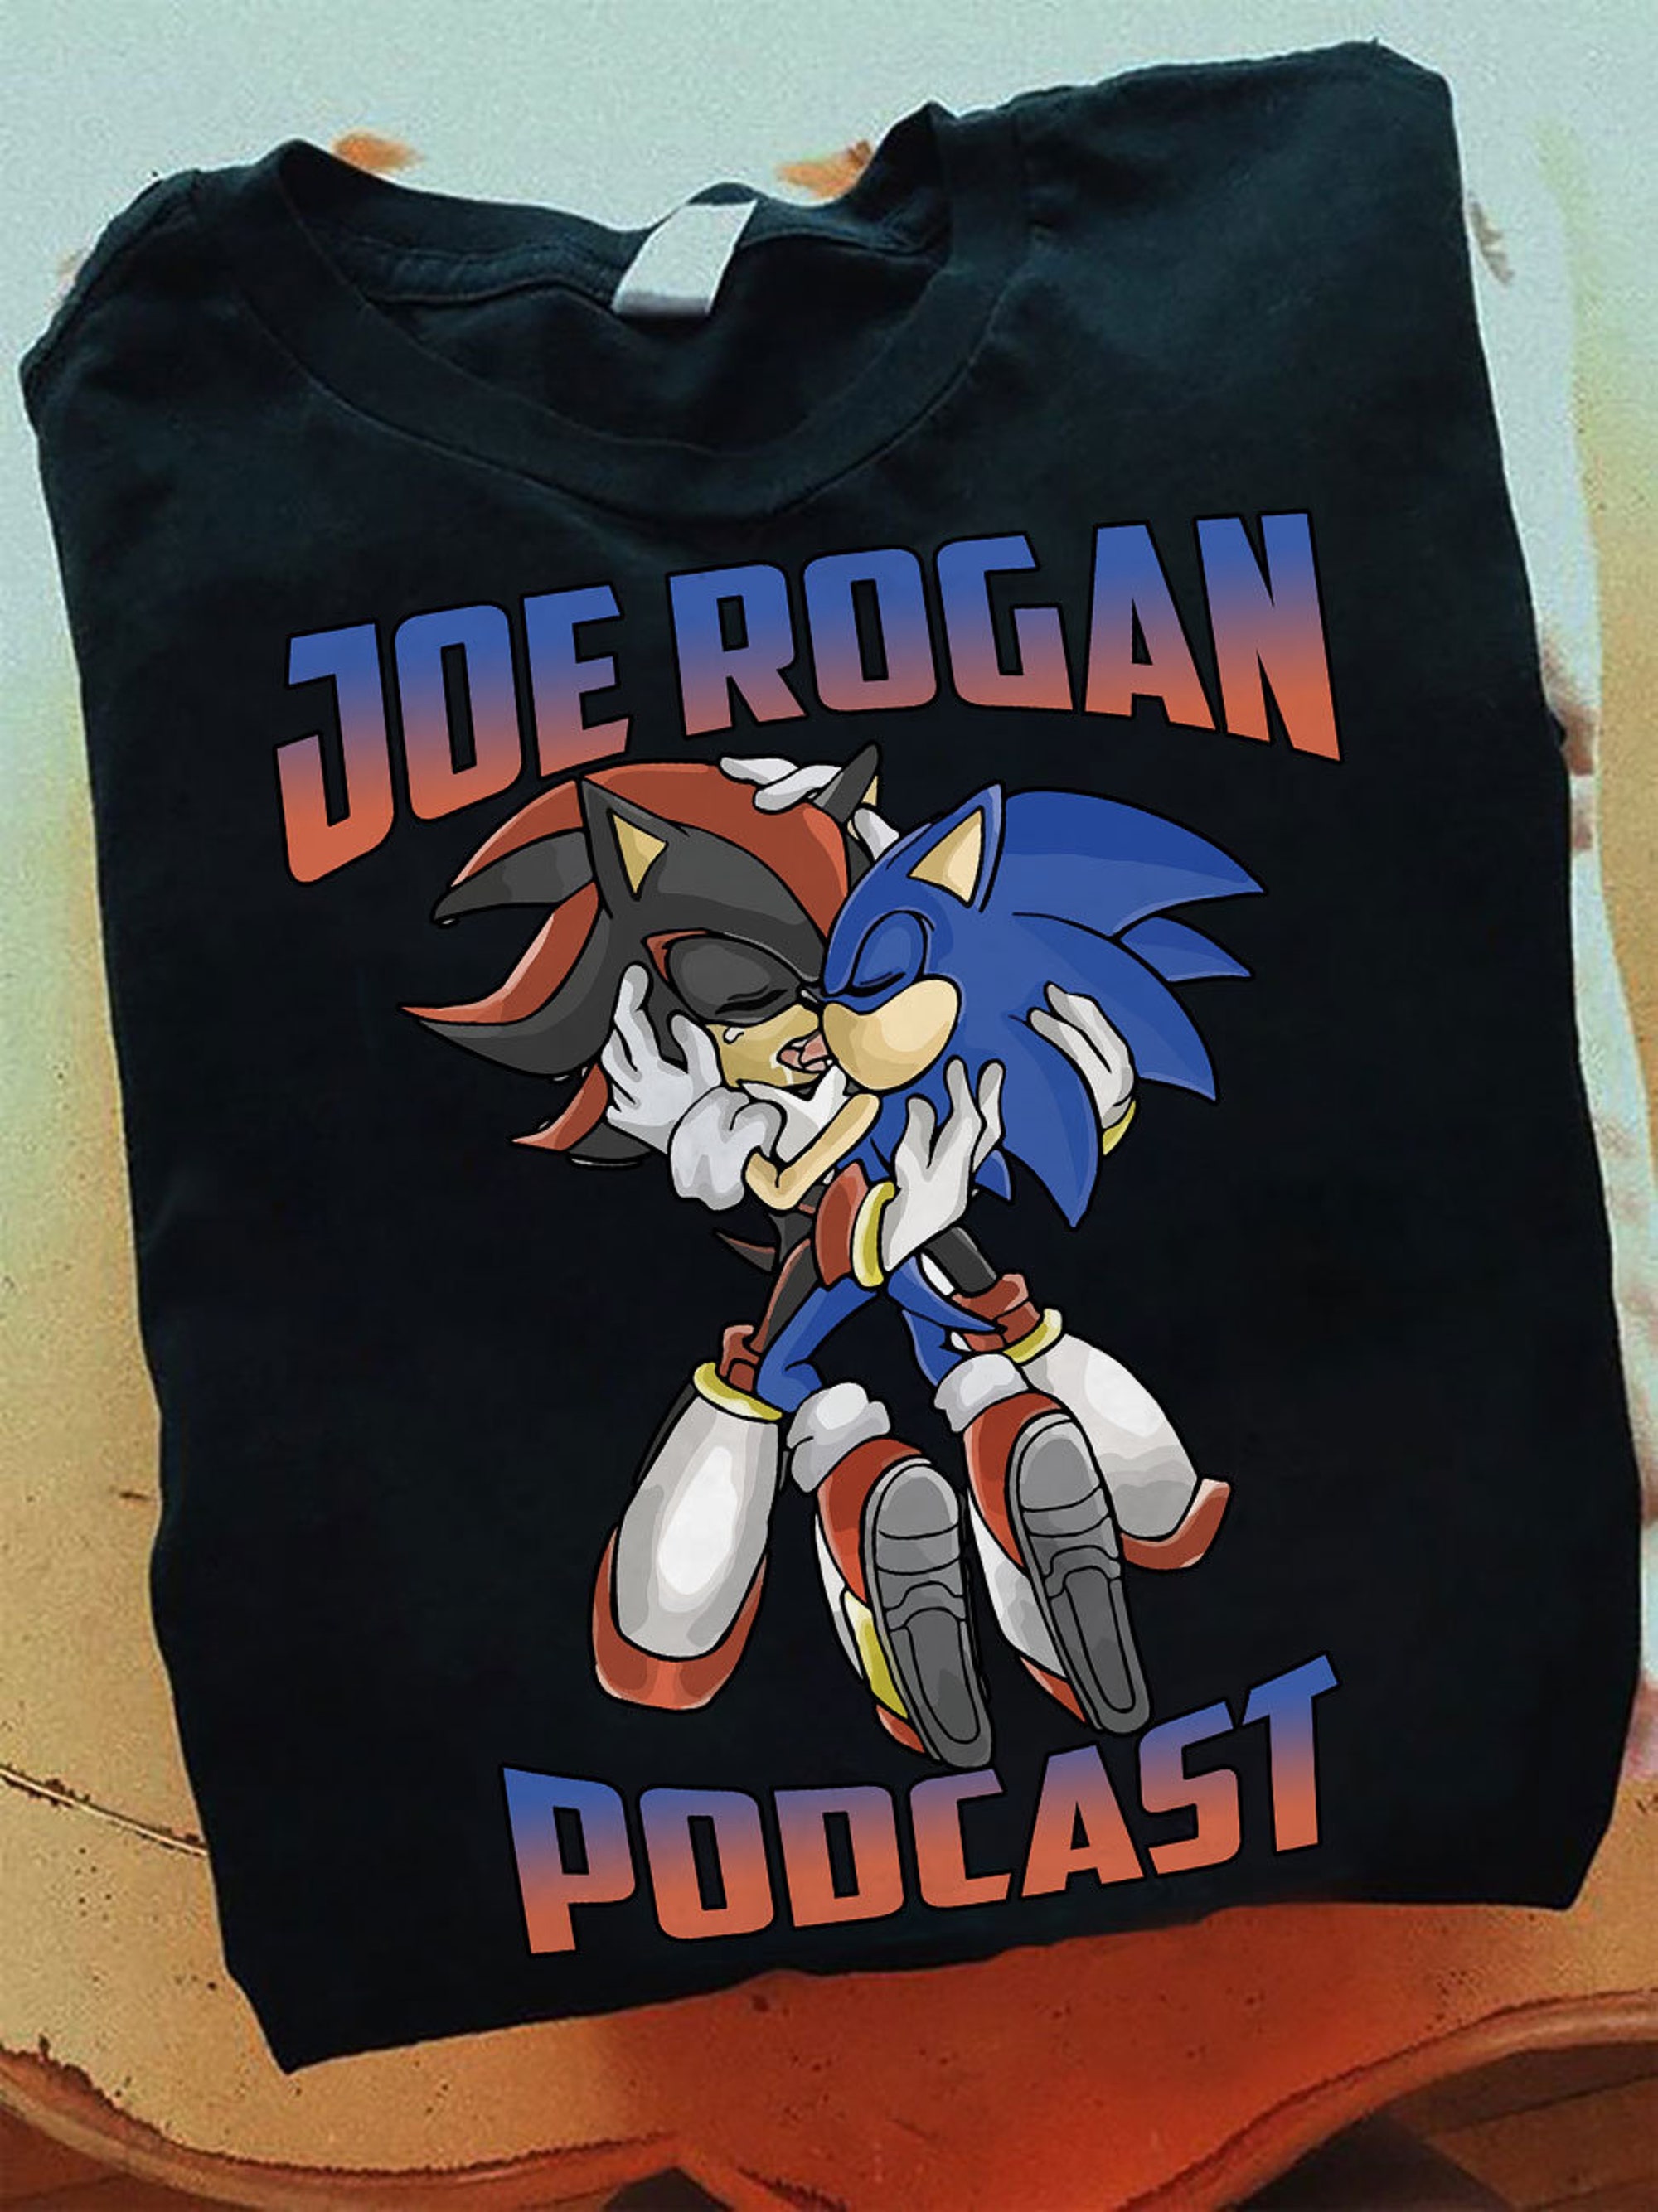 Discover Joe Rogan Podcast Shirt,  Joe Rogan Podcast Sonic Shirt, Joe Rogan Shirt, Sonic Shirt, The Joe Rogan Experience Tshirts